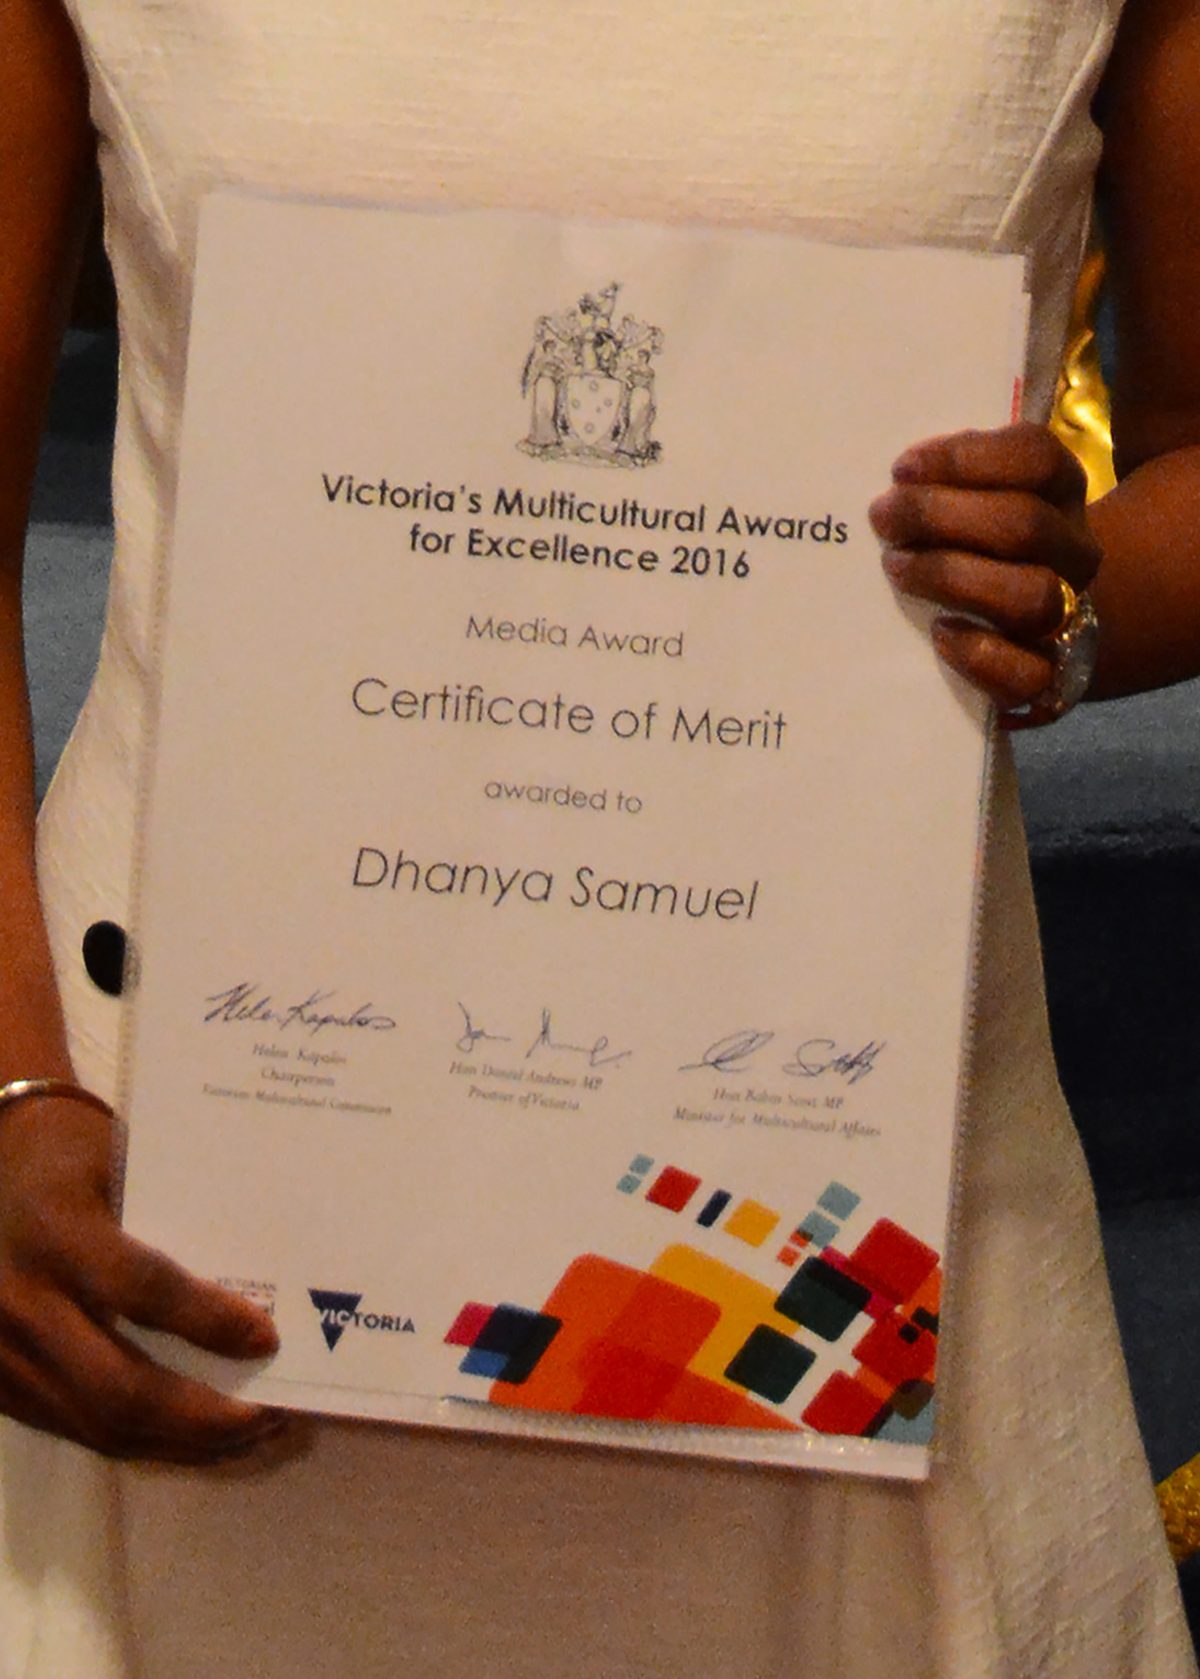 VMC Excellence Awards 2016 (Media) - Certificate of Merit - thespiceadventuress.com